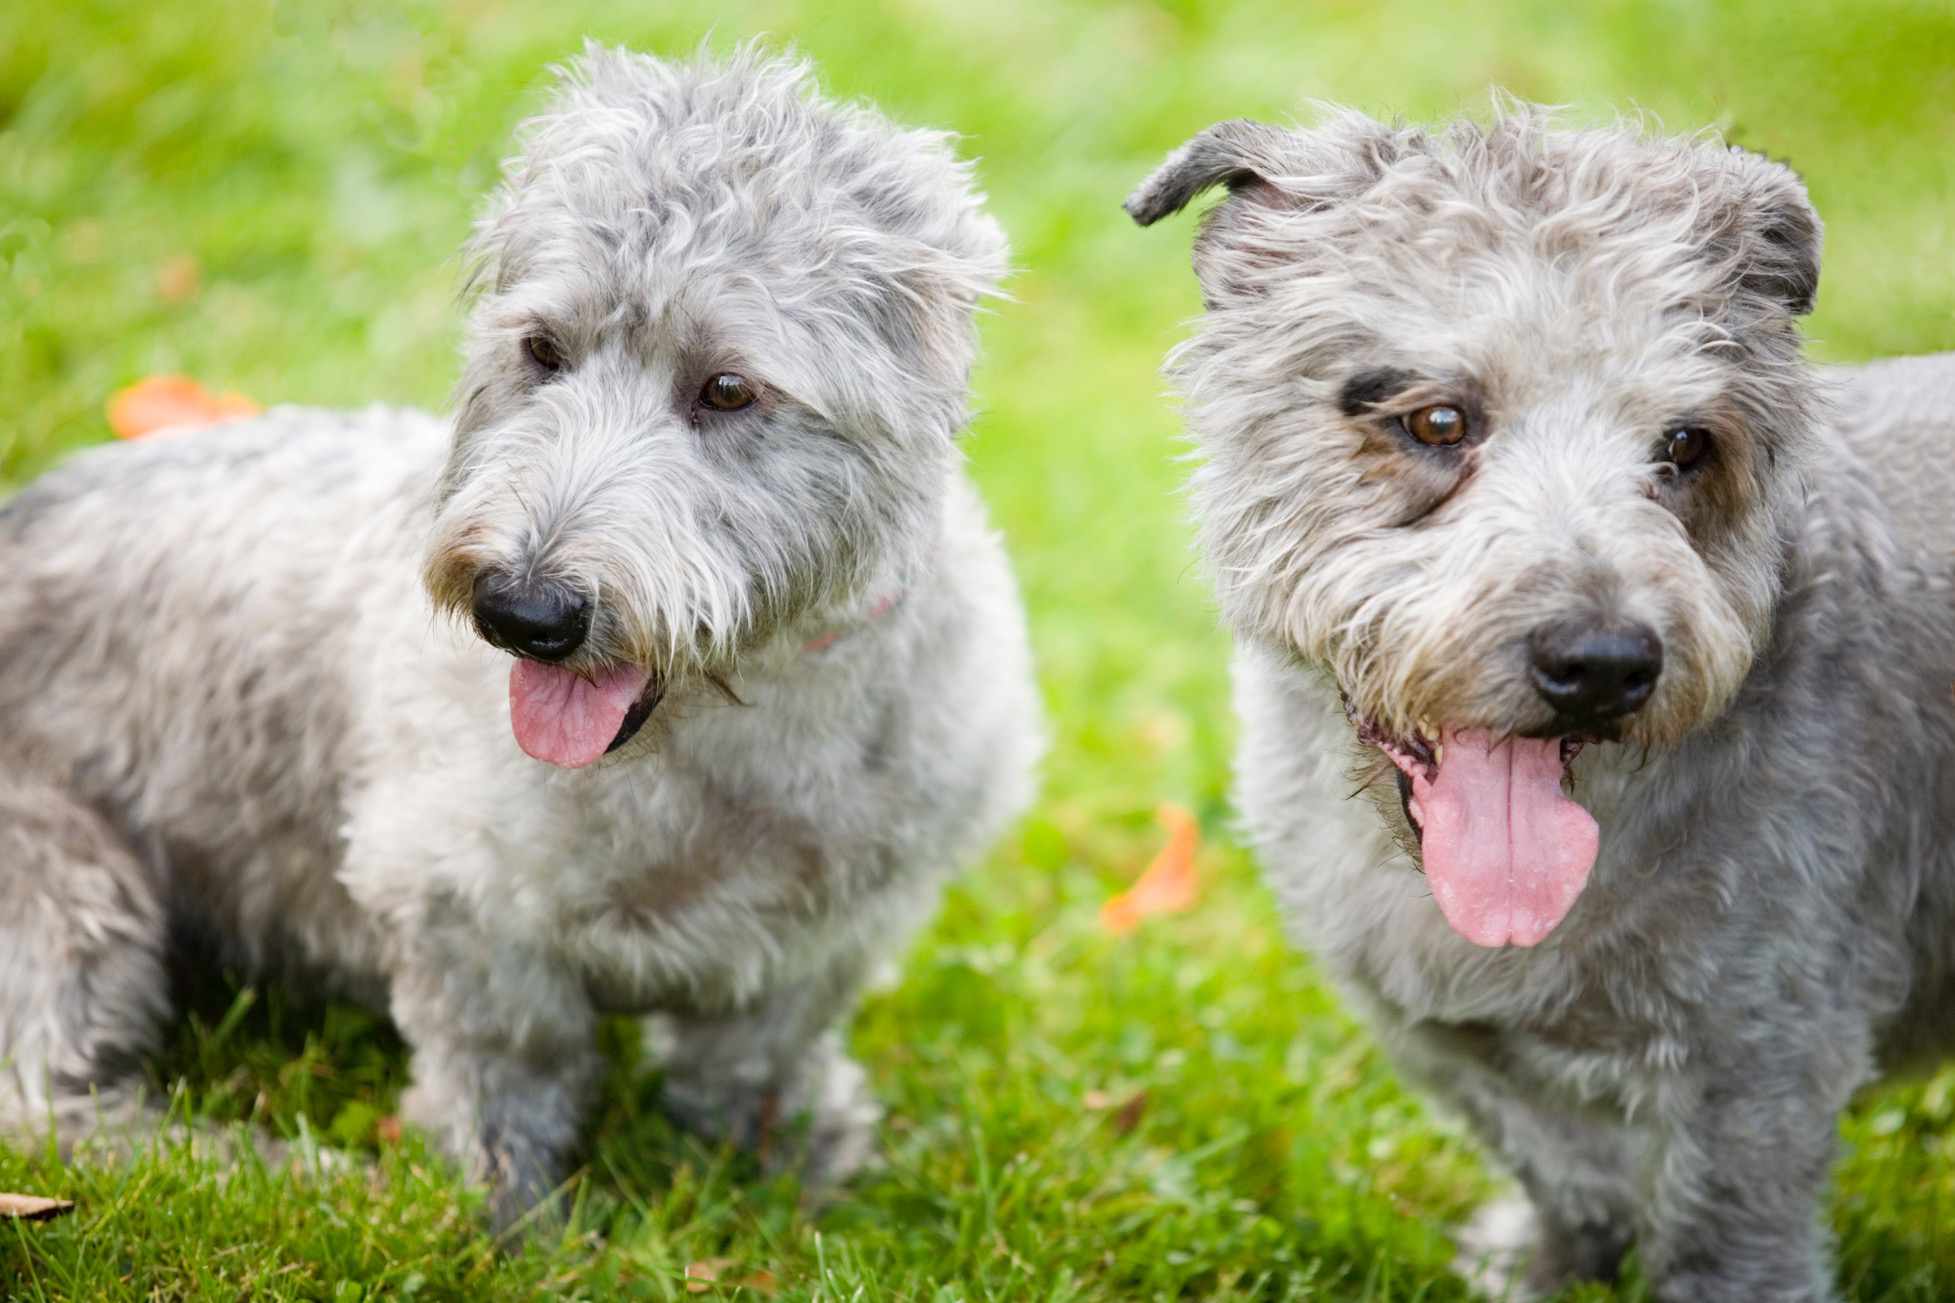 pareja de terriers glen of imaal grises sentados con la lengua fuera